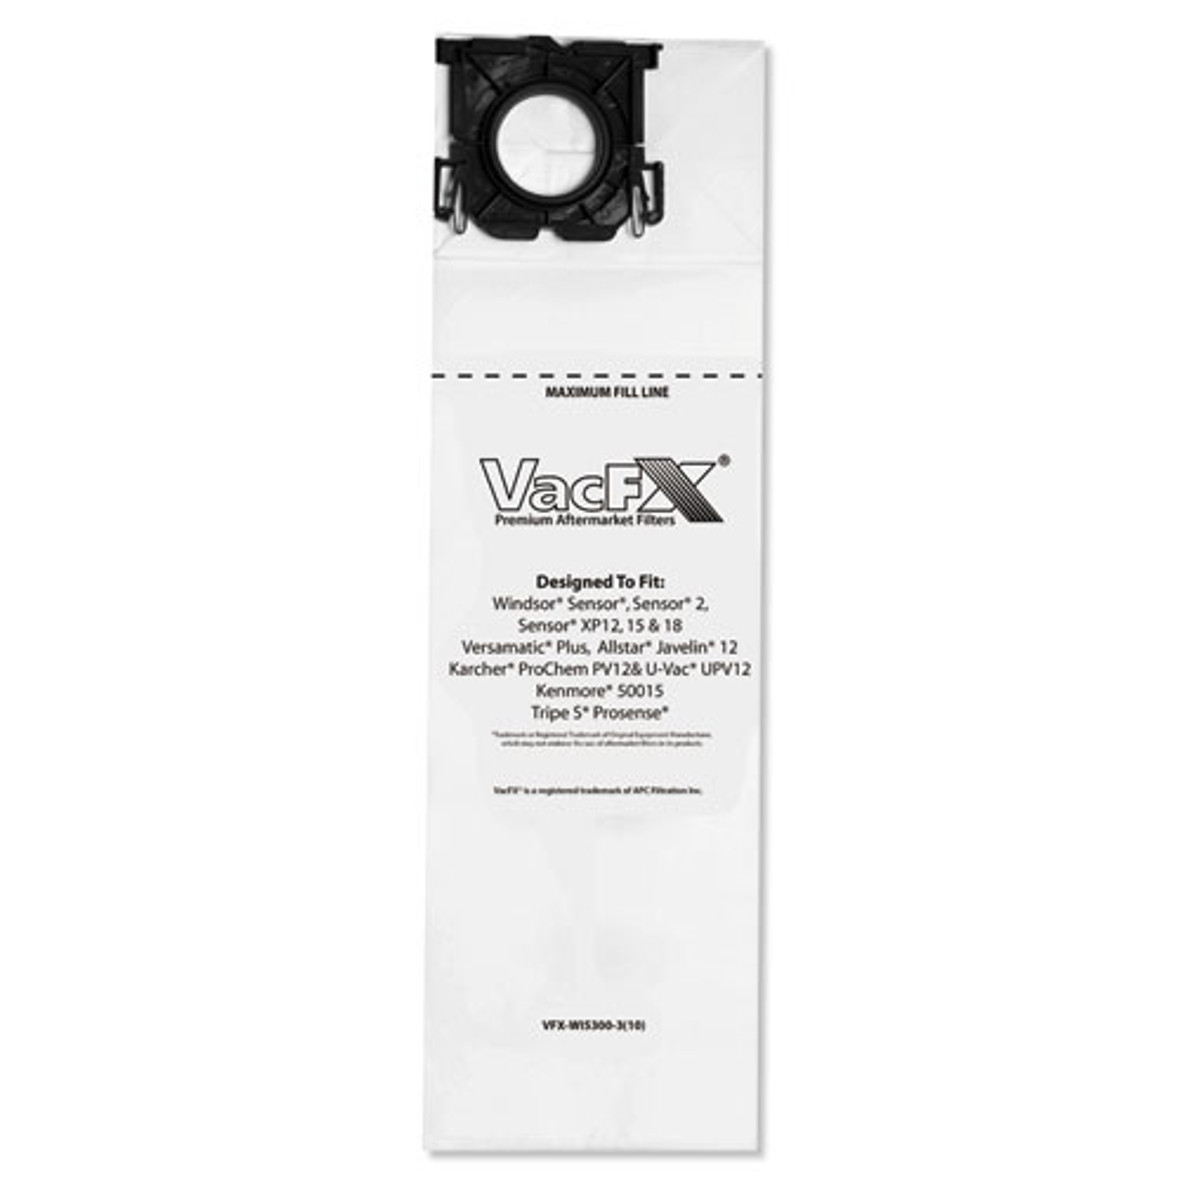 VacFX Vacuum Filter Bags Designed to Fit Windsor Sensor S/S2/XP/Veramatic Plus